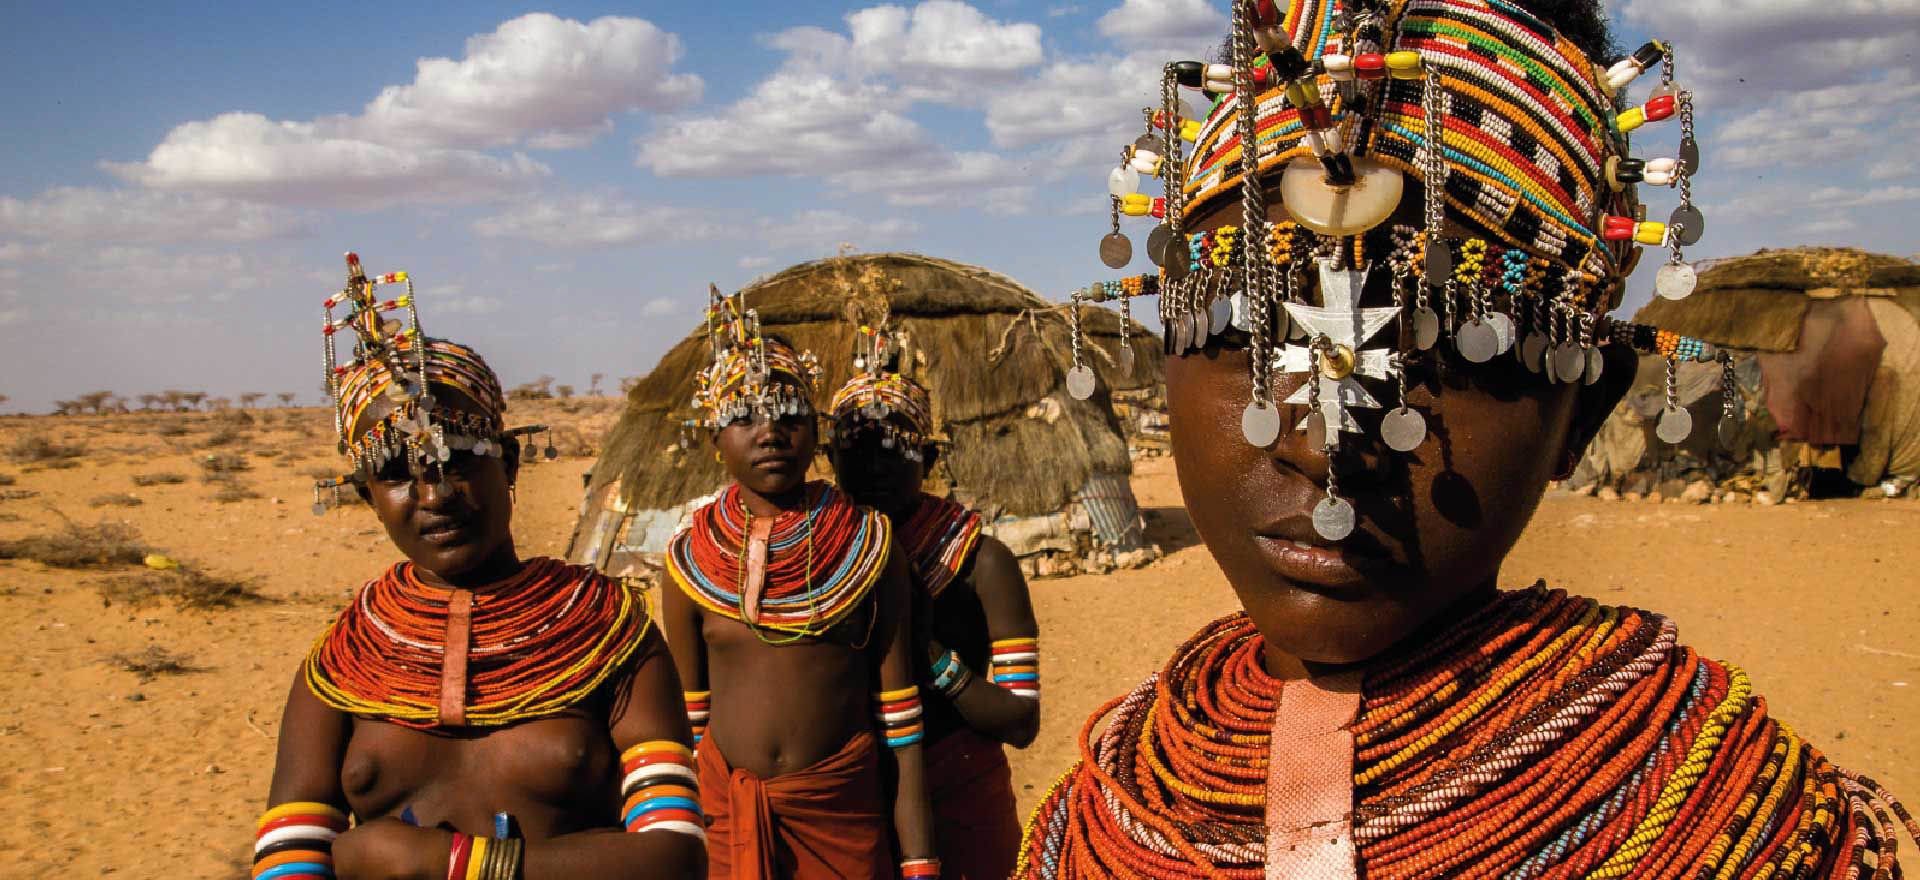 Overview of the Samburu Tribe of Kenya